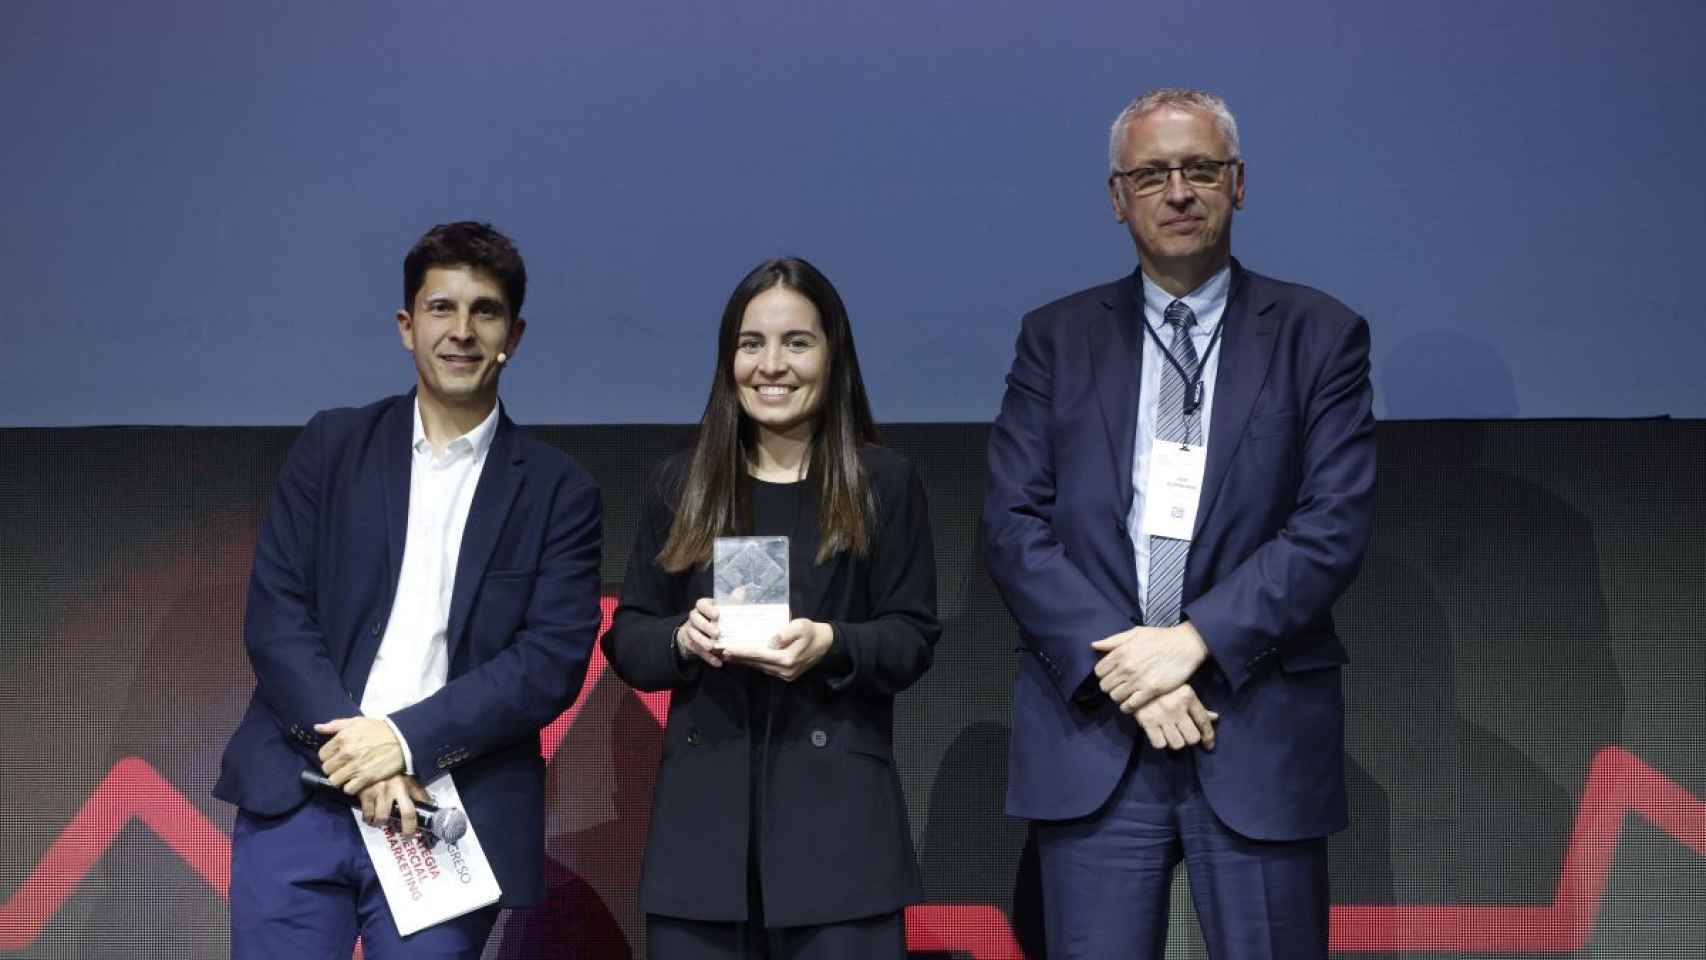 Julia Sala, Marketing Manager de Grupo Gallo, recogiendo el premio